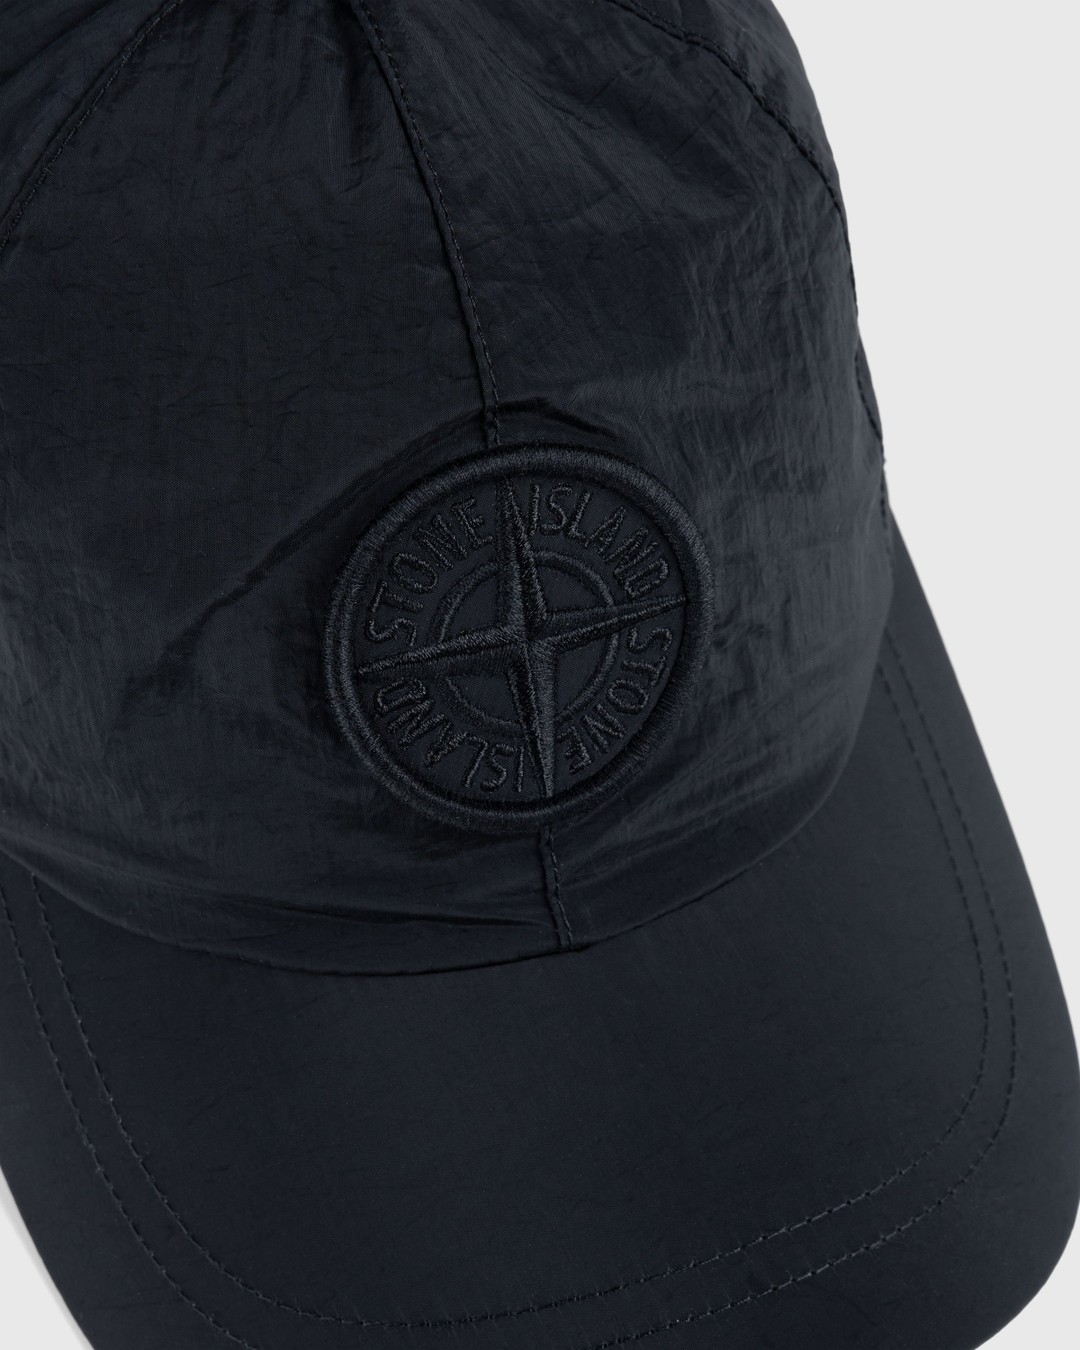 Stone Island – Six Panel Cap Black - Hats - Black - Image 4